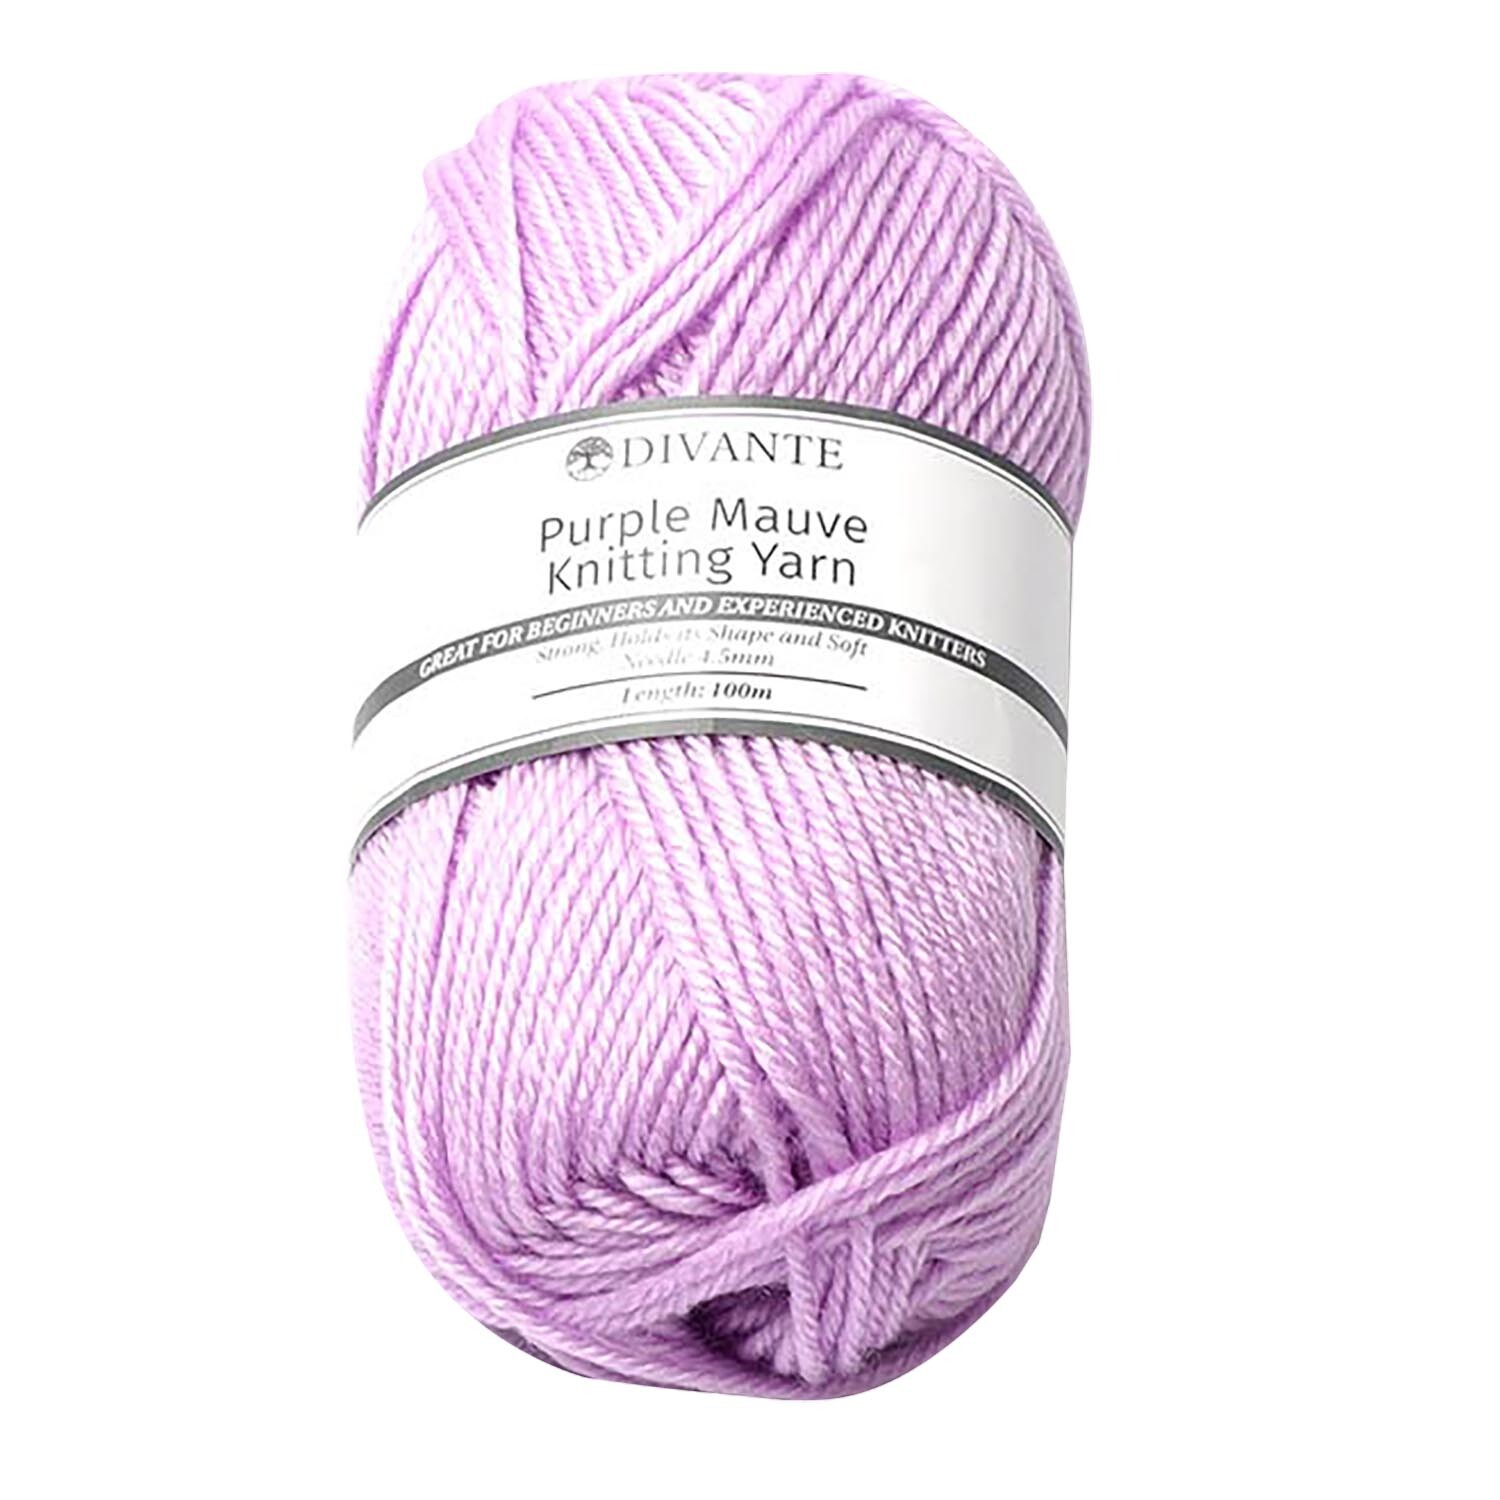 Divante Value Knitting Yarn - Purple Mauve Image